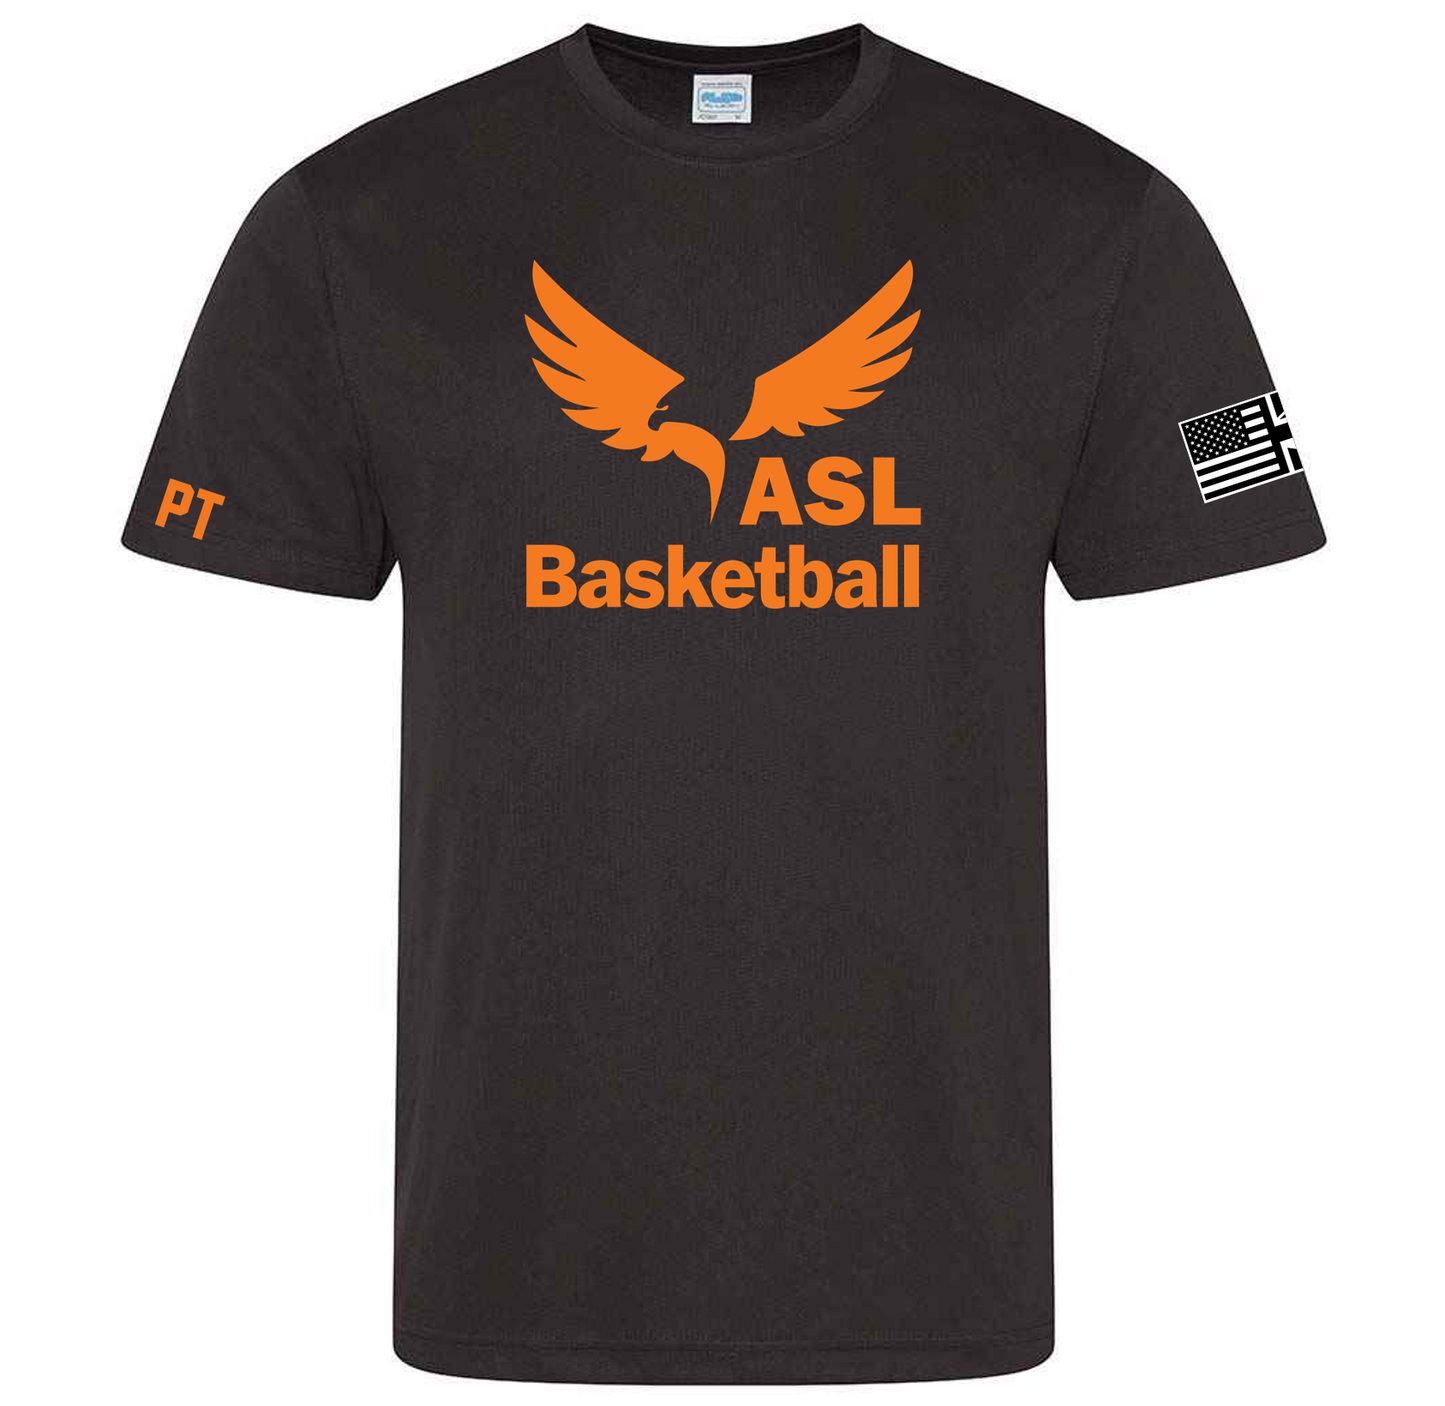 ASL Basketball Tech Tee